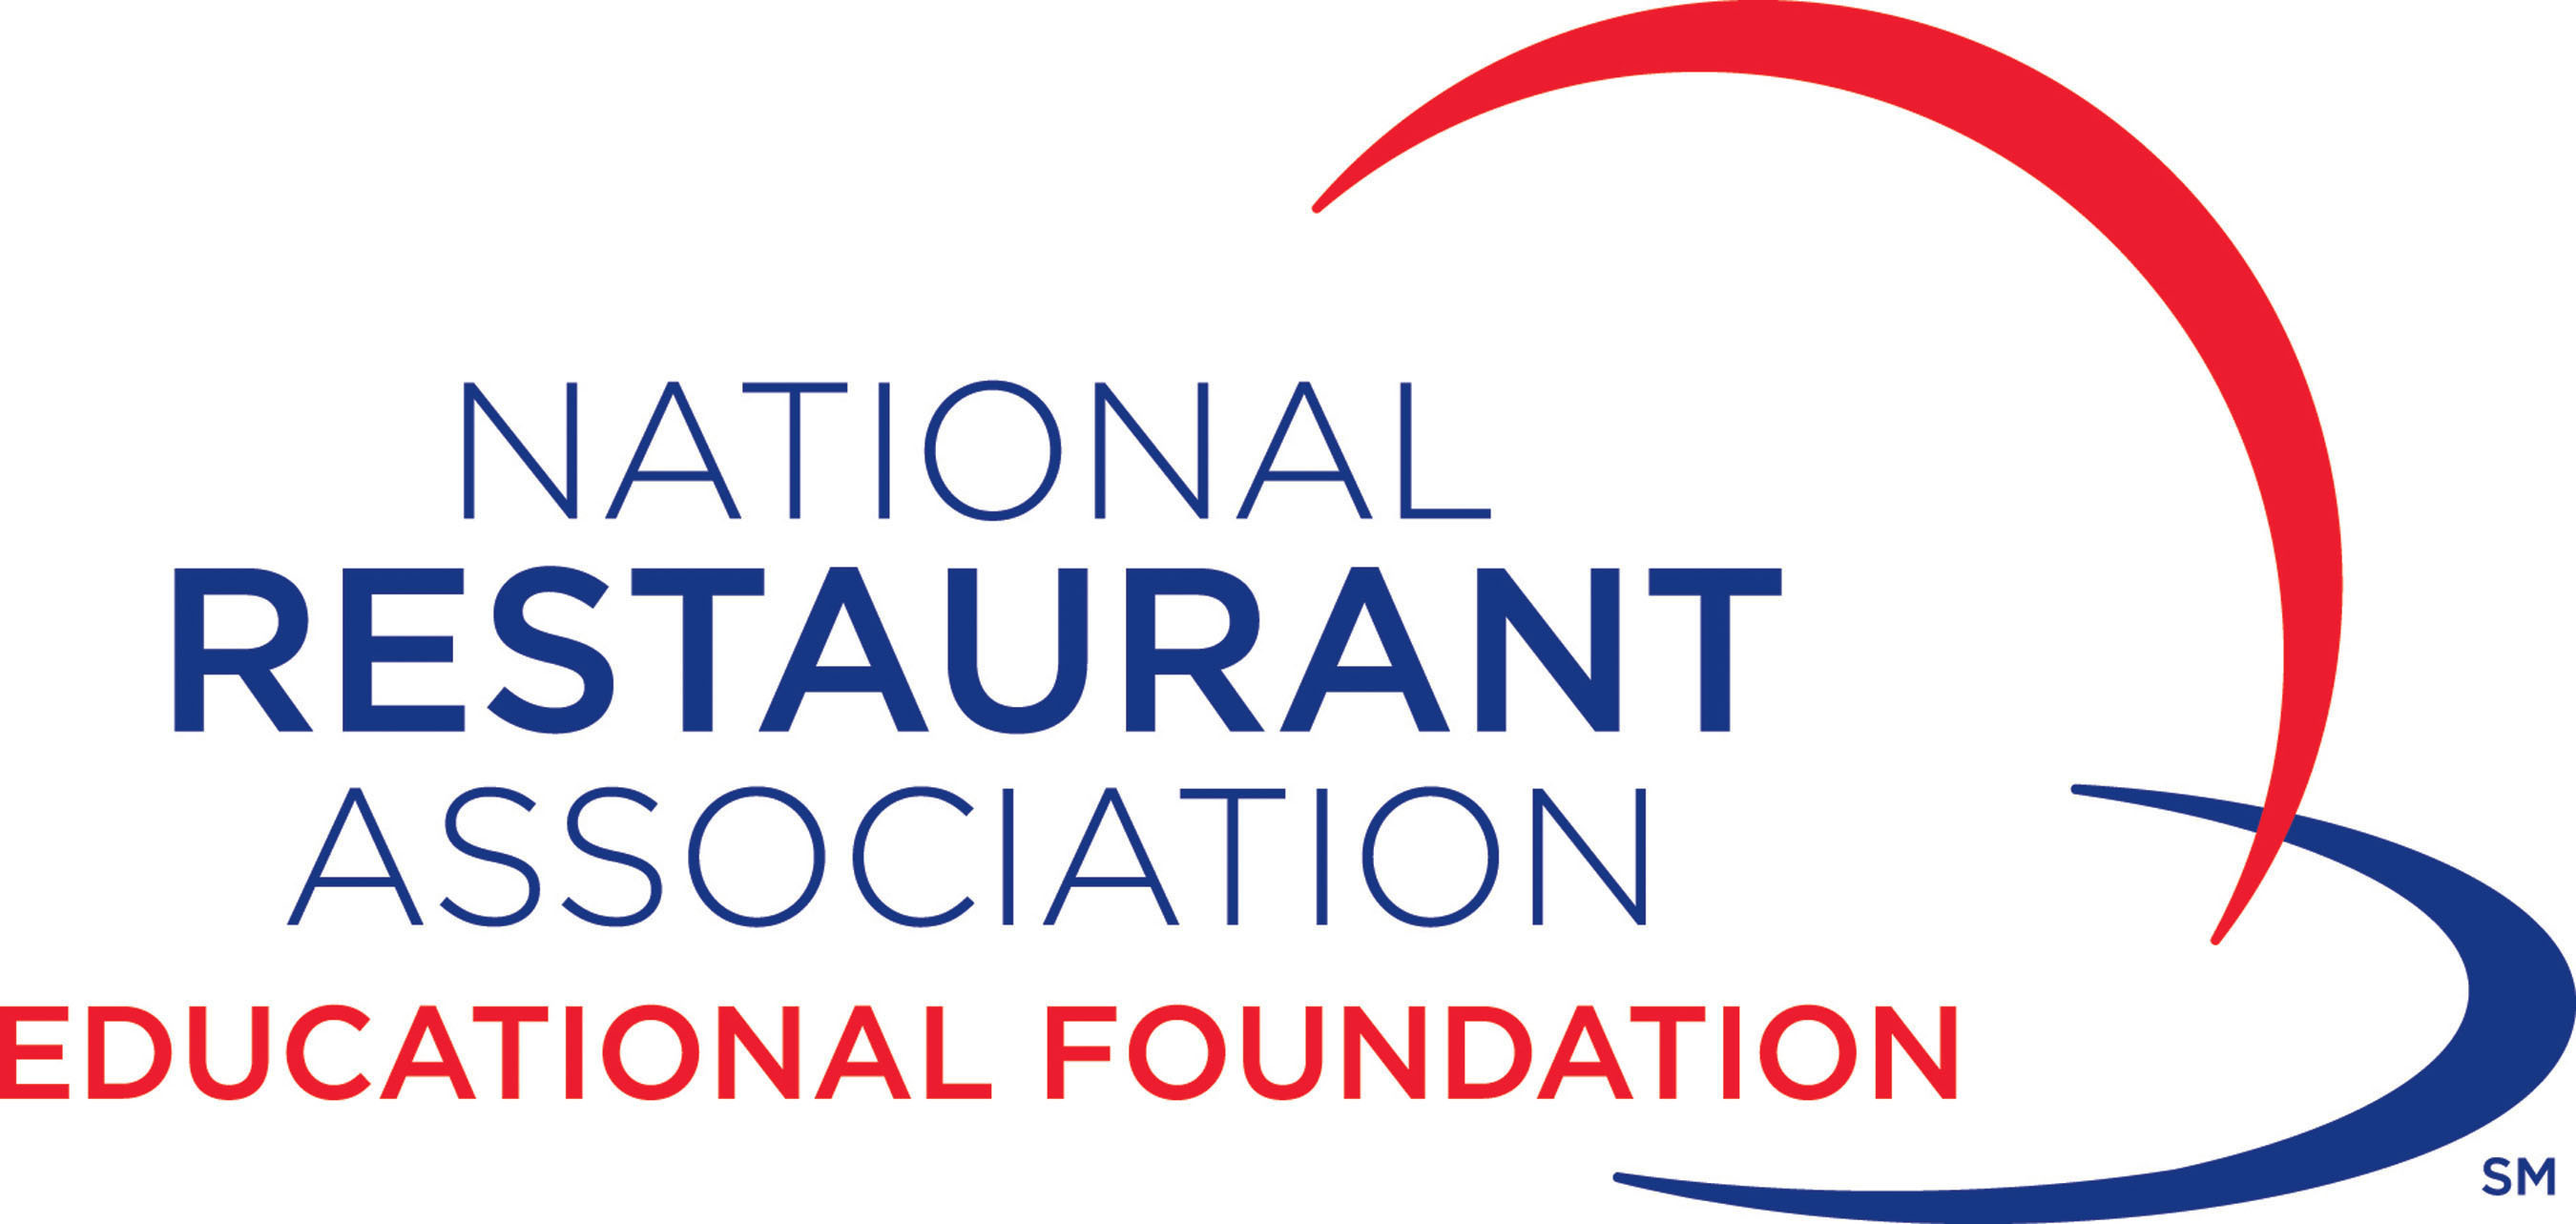 National Restaurant Association Educational Foundation Logo.